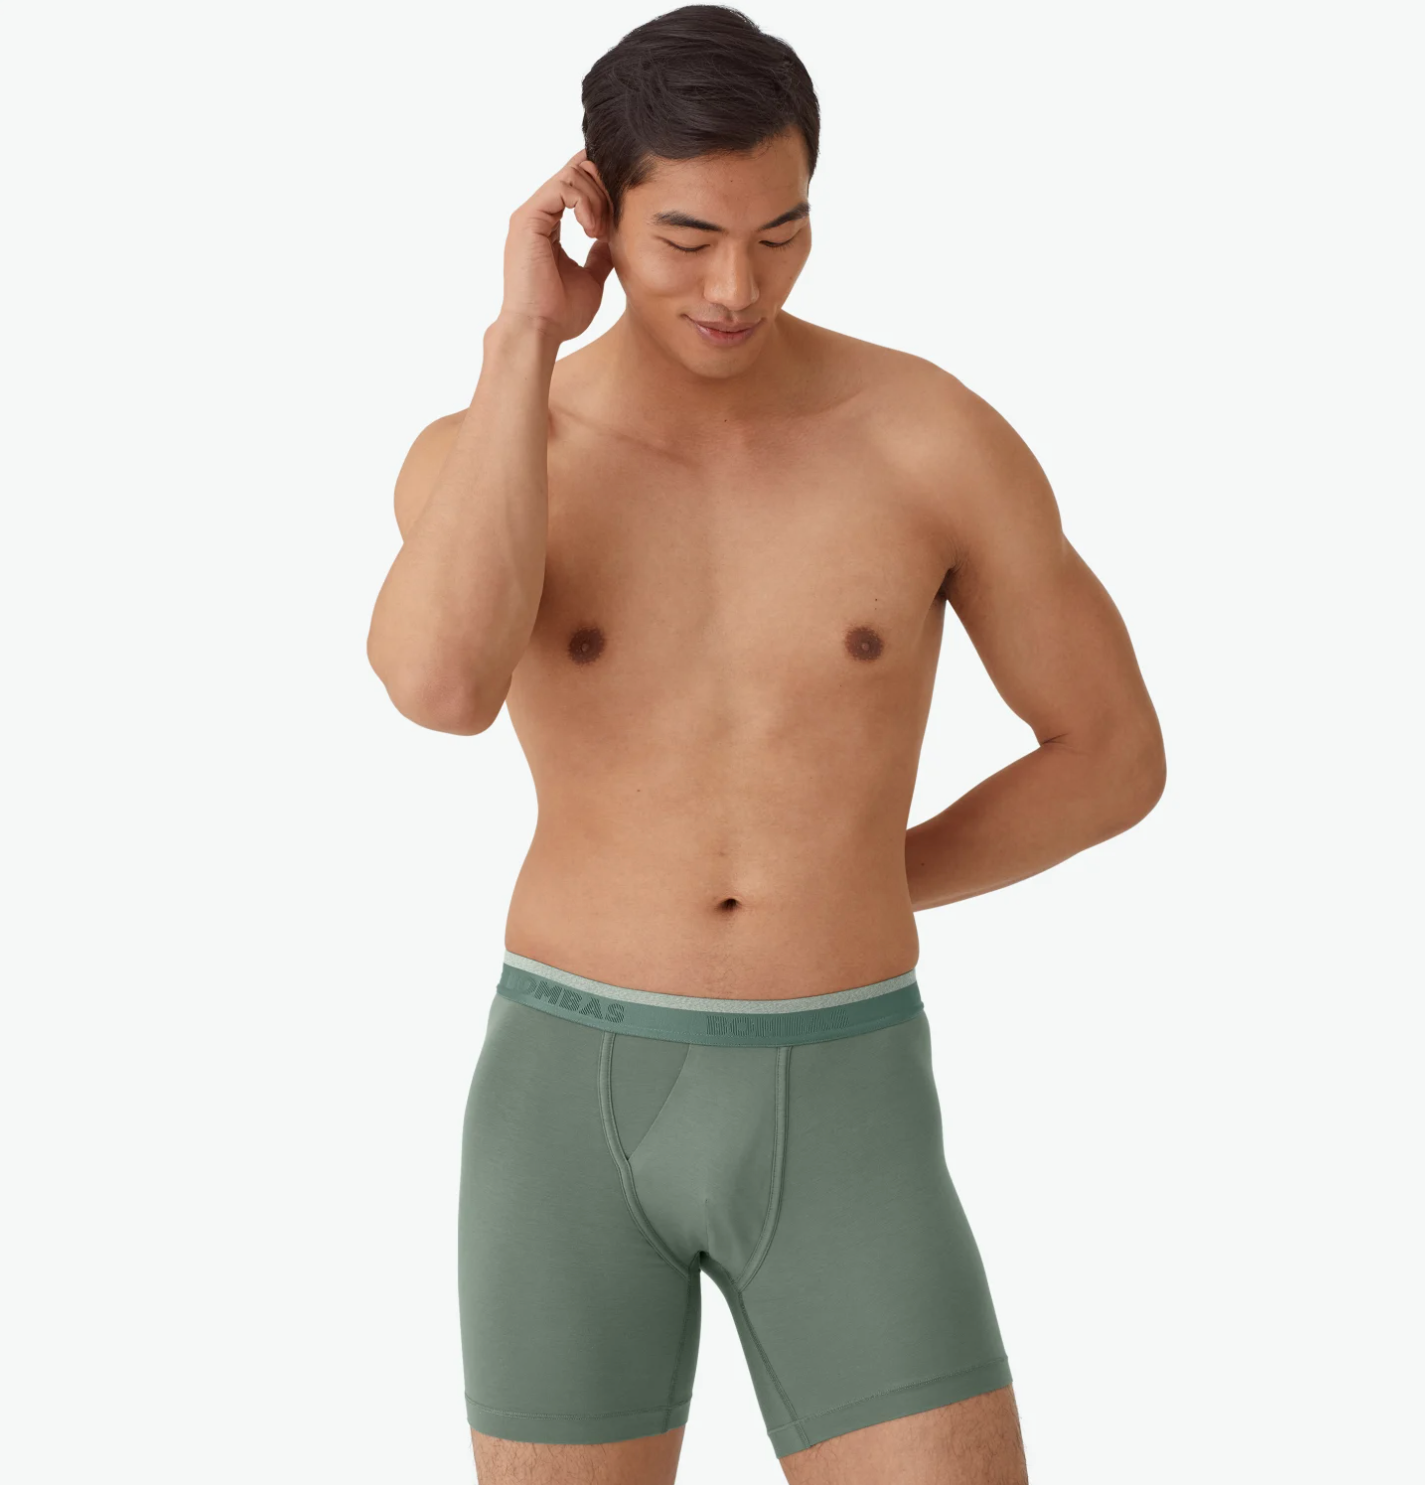 A model wearing green boxer briefs.